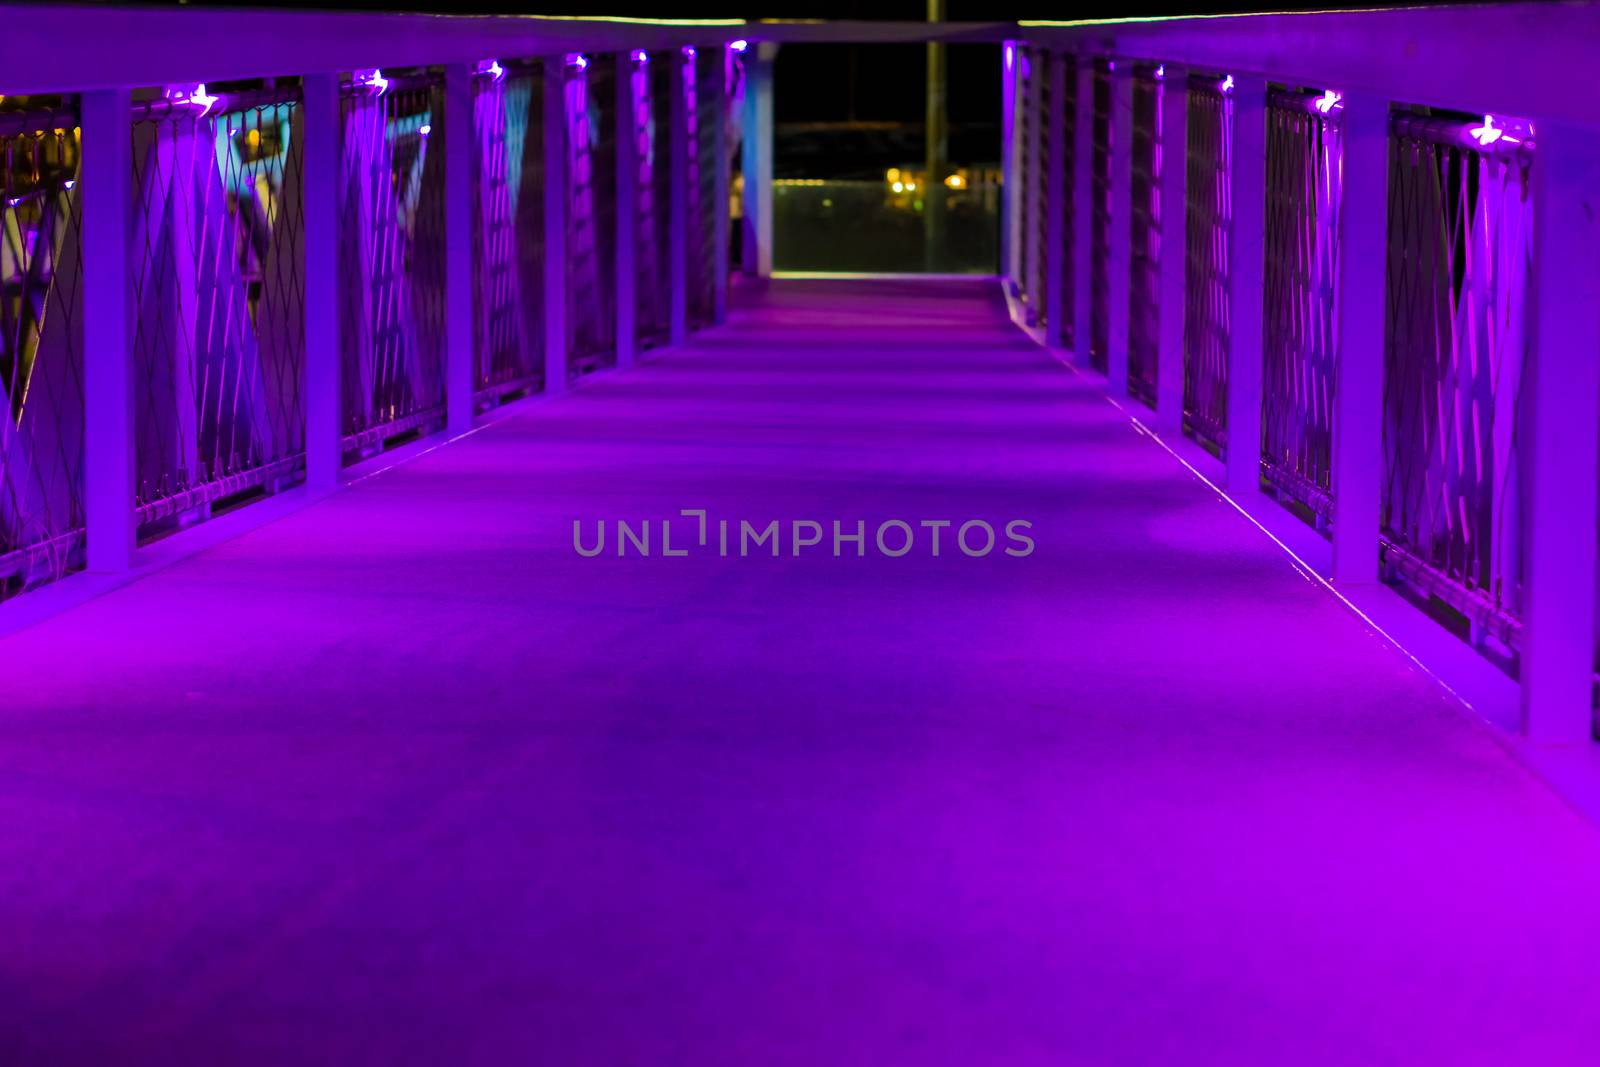 modern city architecture a bridge with purple neon lights in scheveningen the netherlands a urban cityscape scenery by charlottebleijenberg